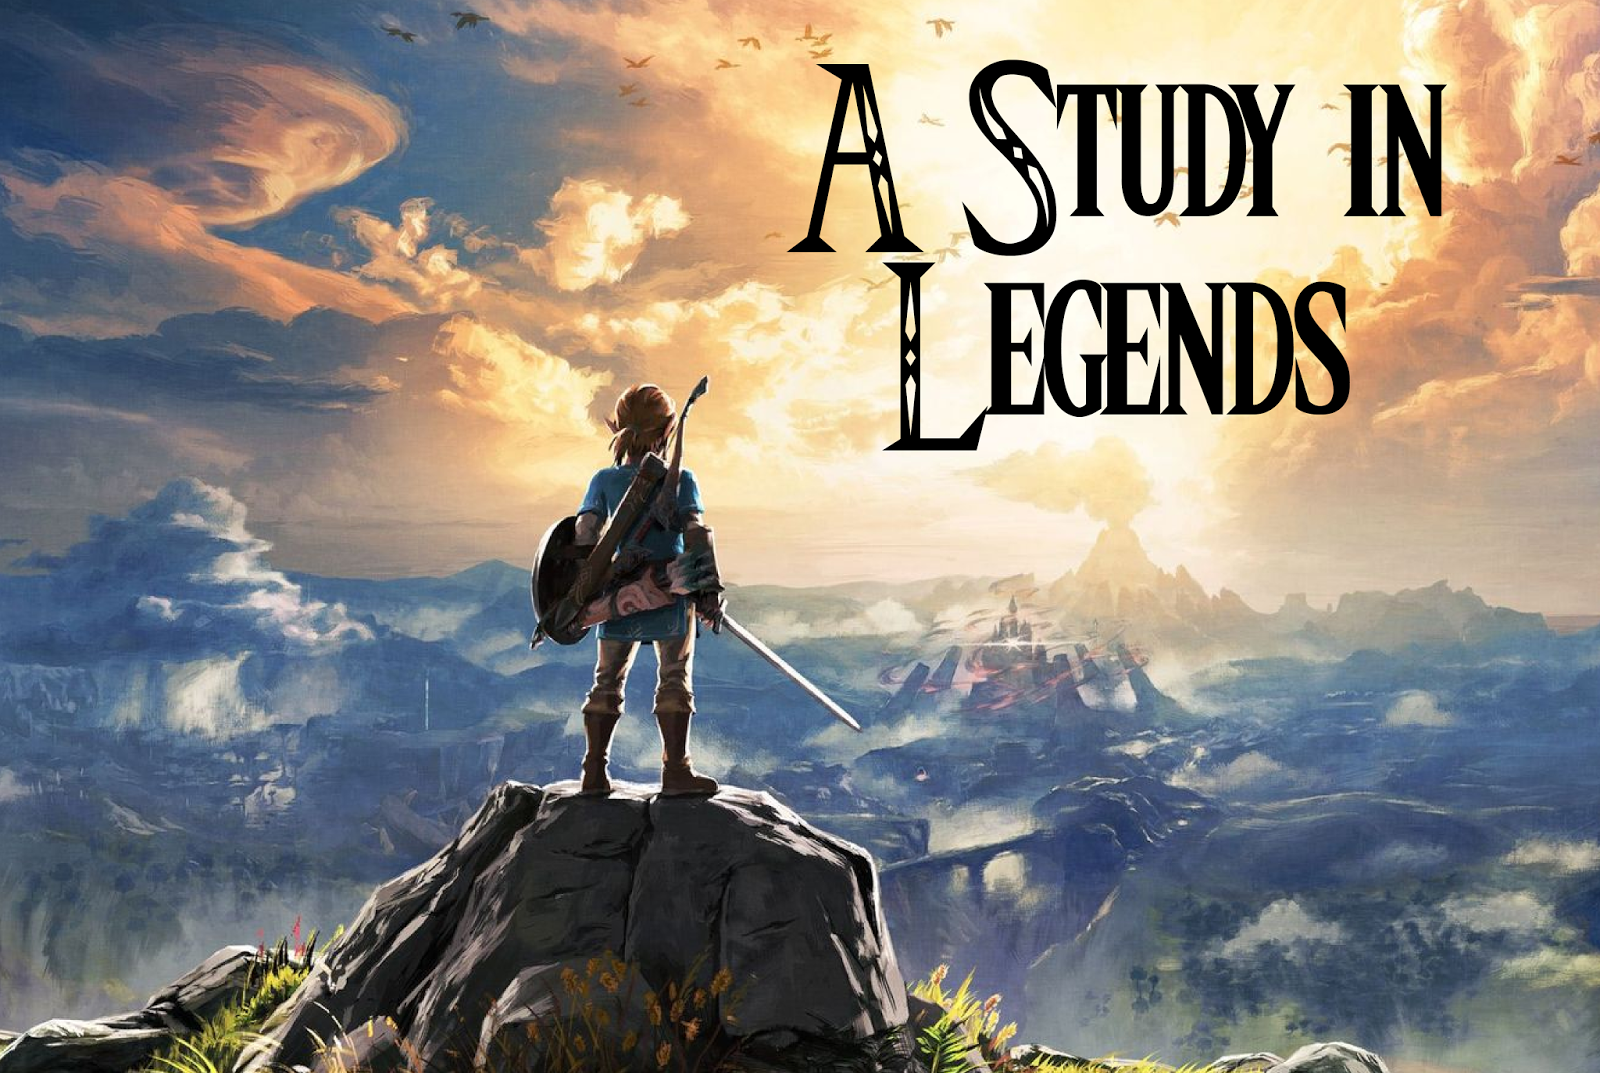 The Legend of Zelda: Ocarina of Time - Part 1 by Akira Himekawa